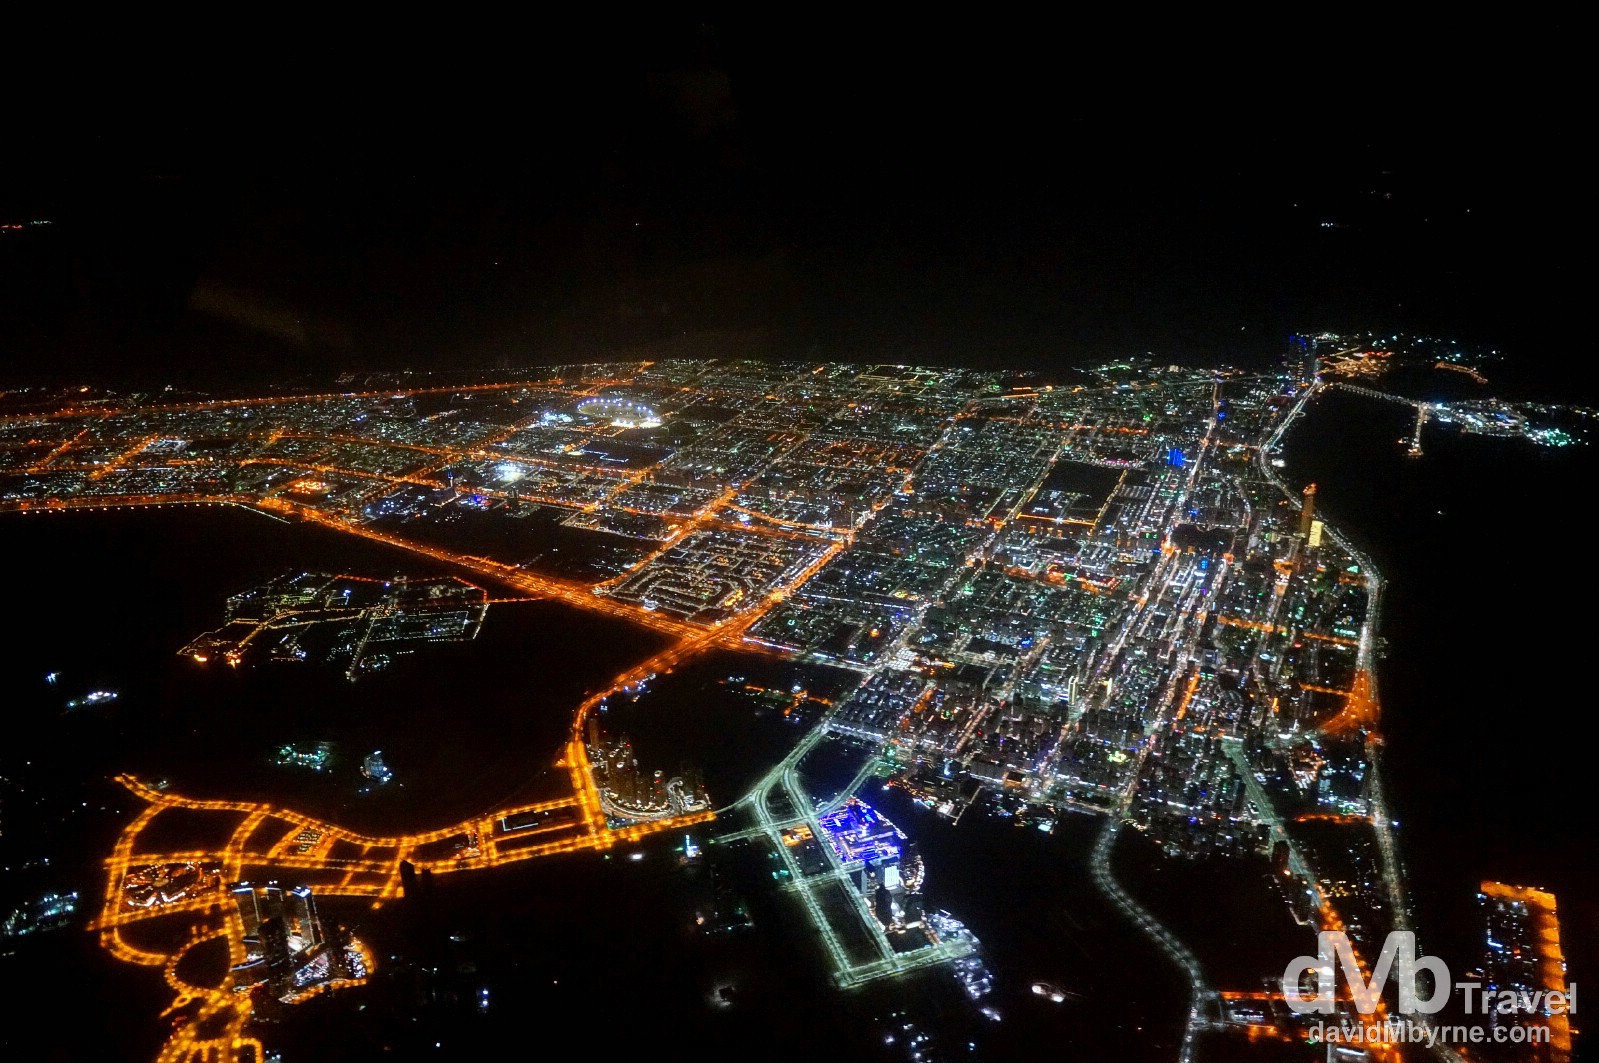 Abu Dhabi, UAE, as seen from Rotana Jet flight RG125 en route to Muscat, Oman. April 24th, 2014. 